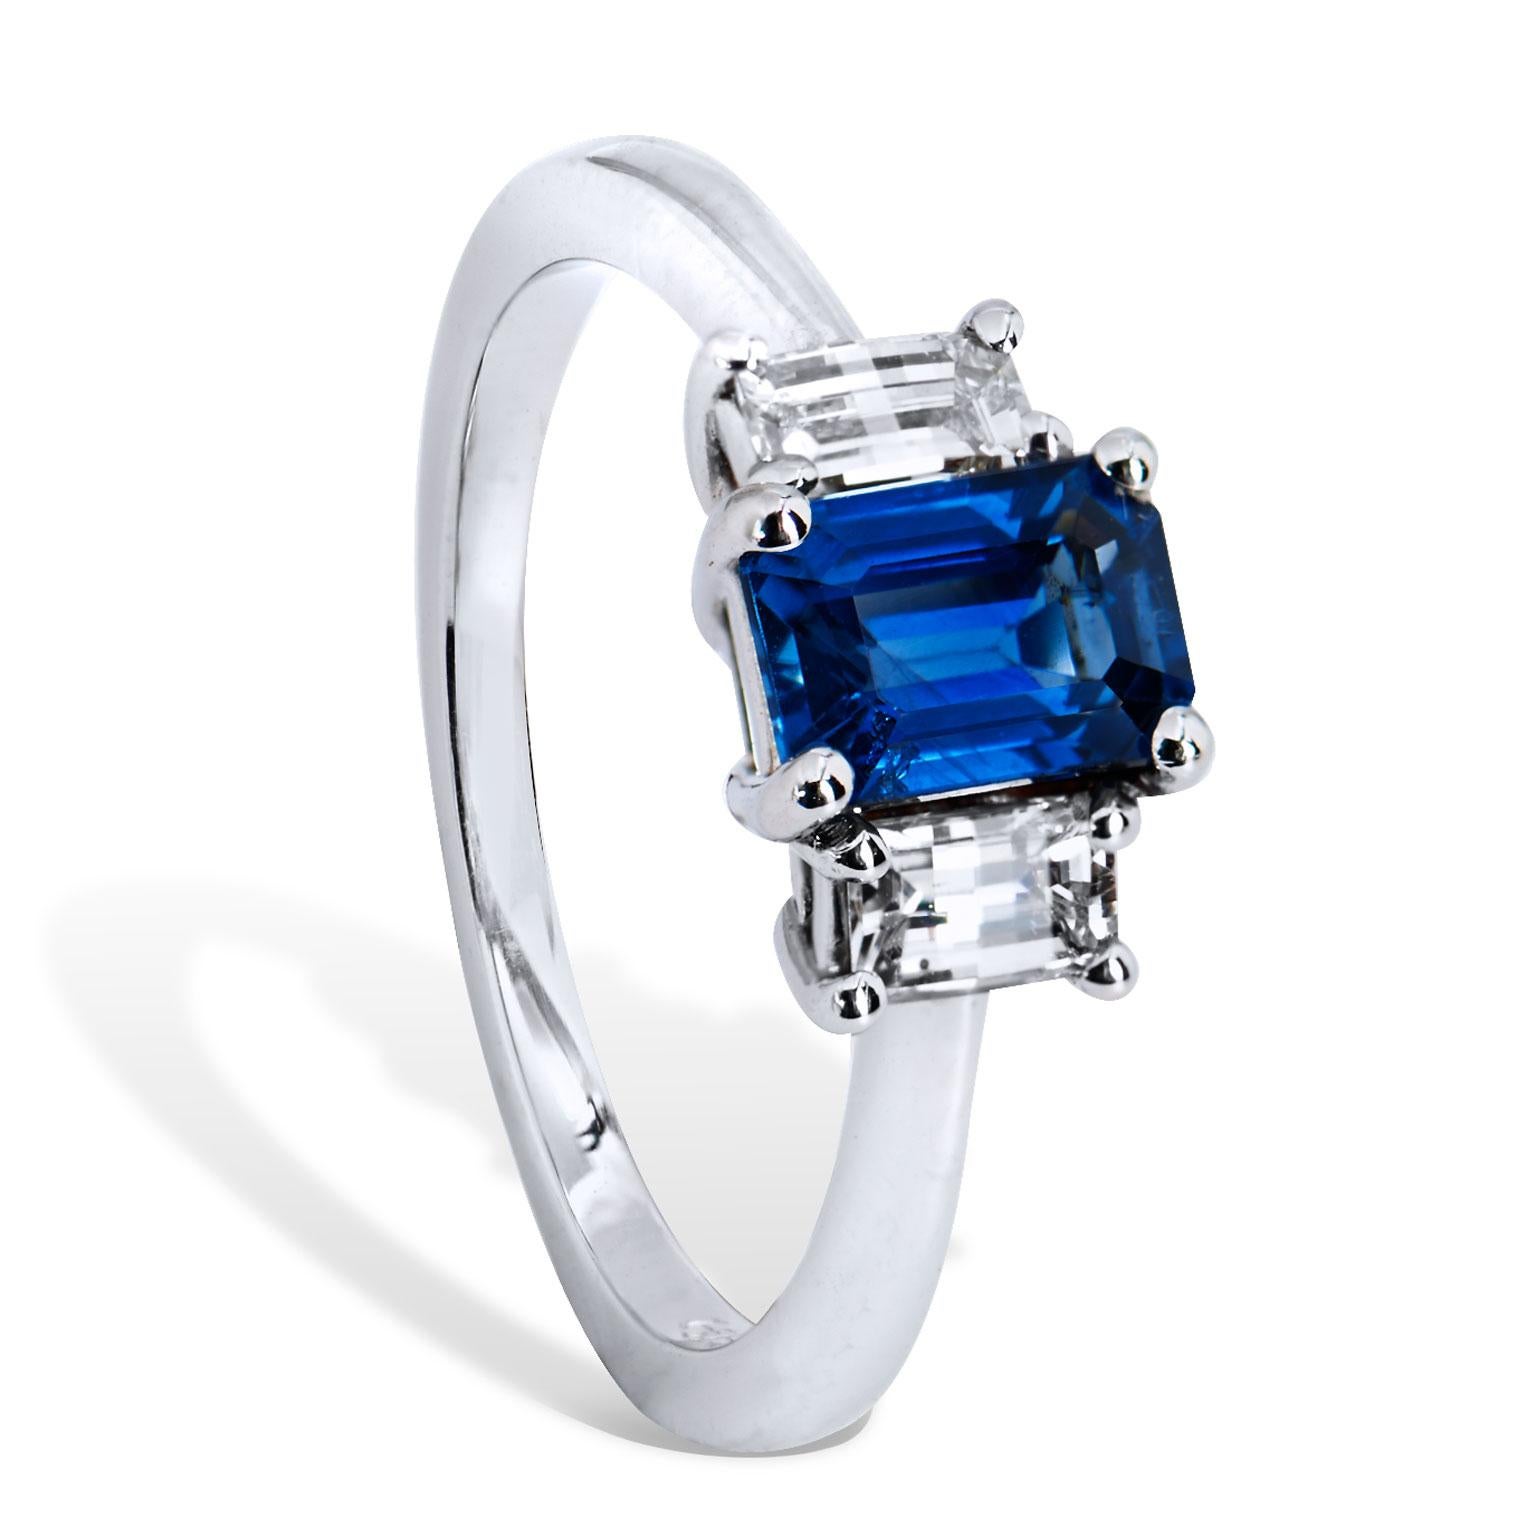 Women's H & H 1.28 Carat Emerald Cut Blue Sapphire Fashion Ring